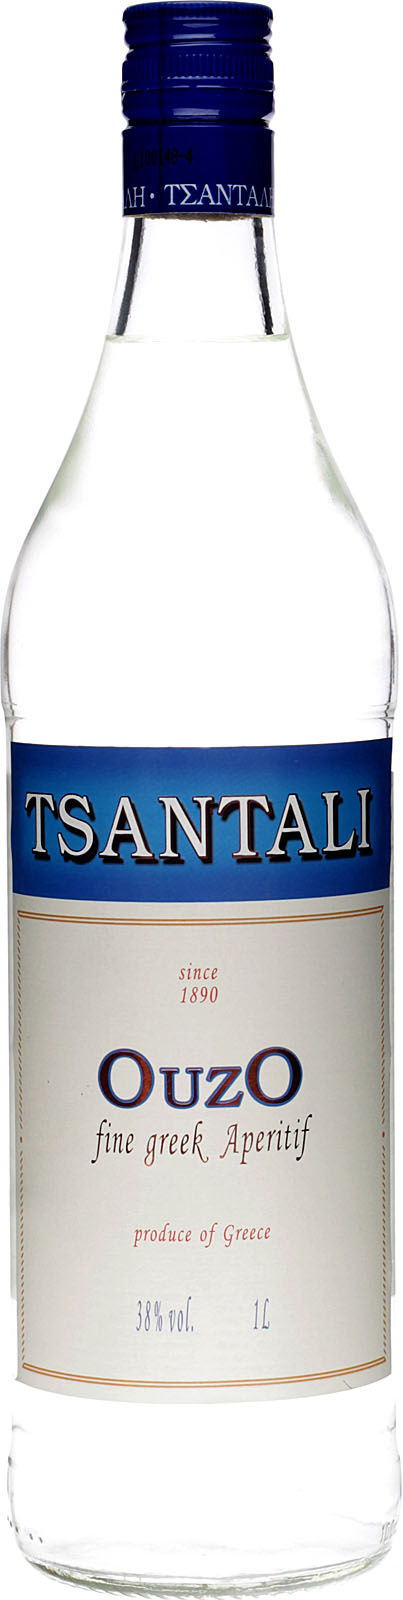 Tsantali Ouzo 1 38% Liter